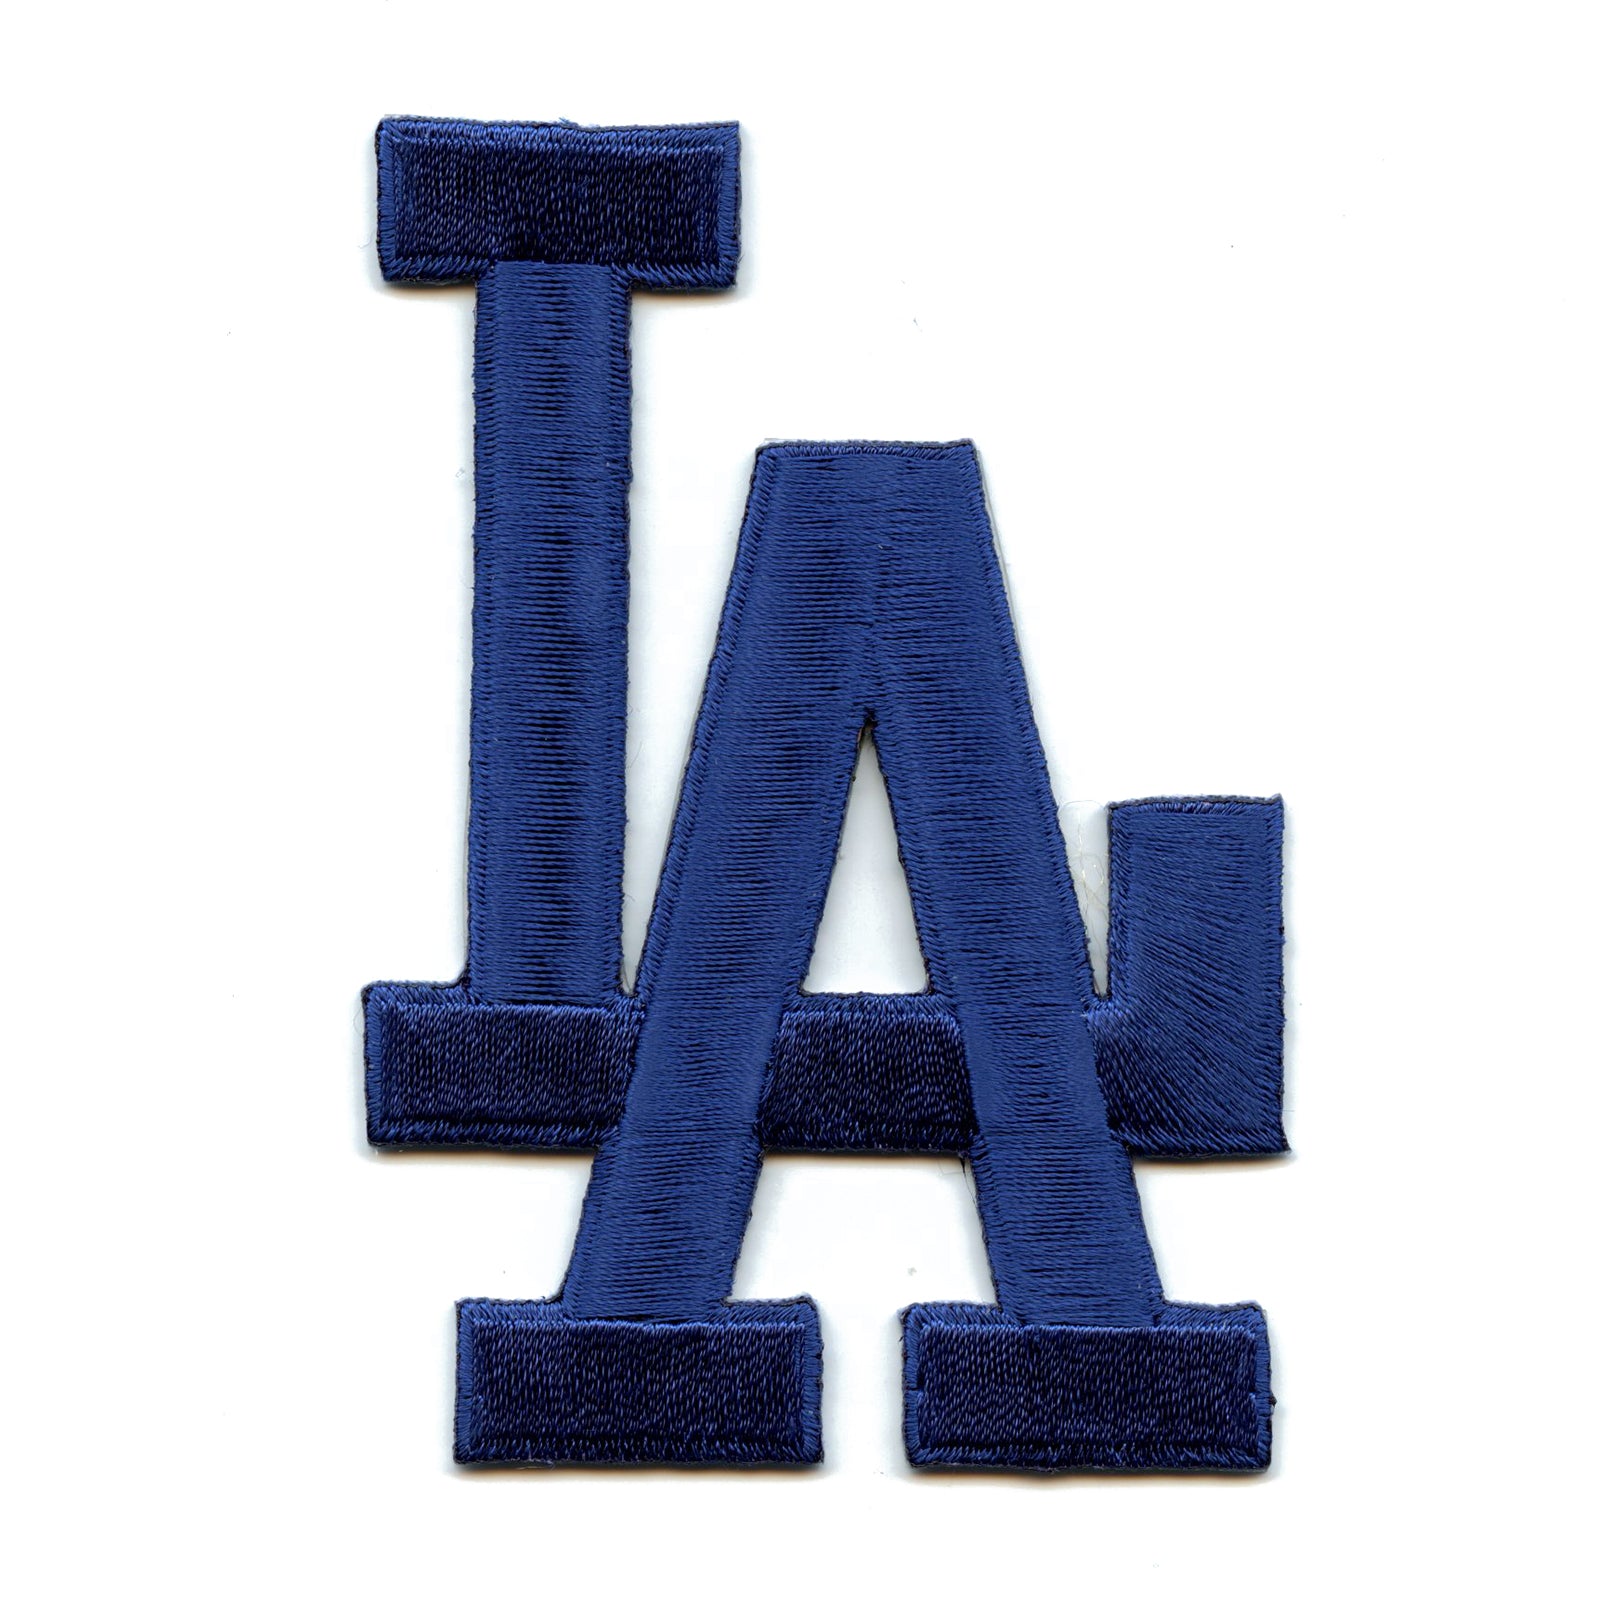 Los Angeles Dodgers Jersey Logo  Los angeles dodgers logo, Los angeles  dodgers, ? logo